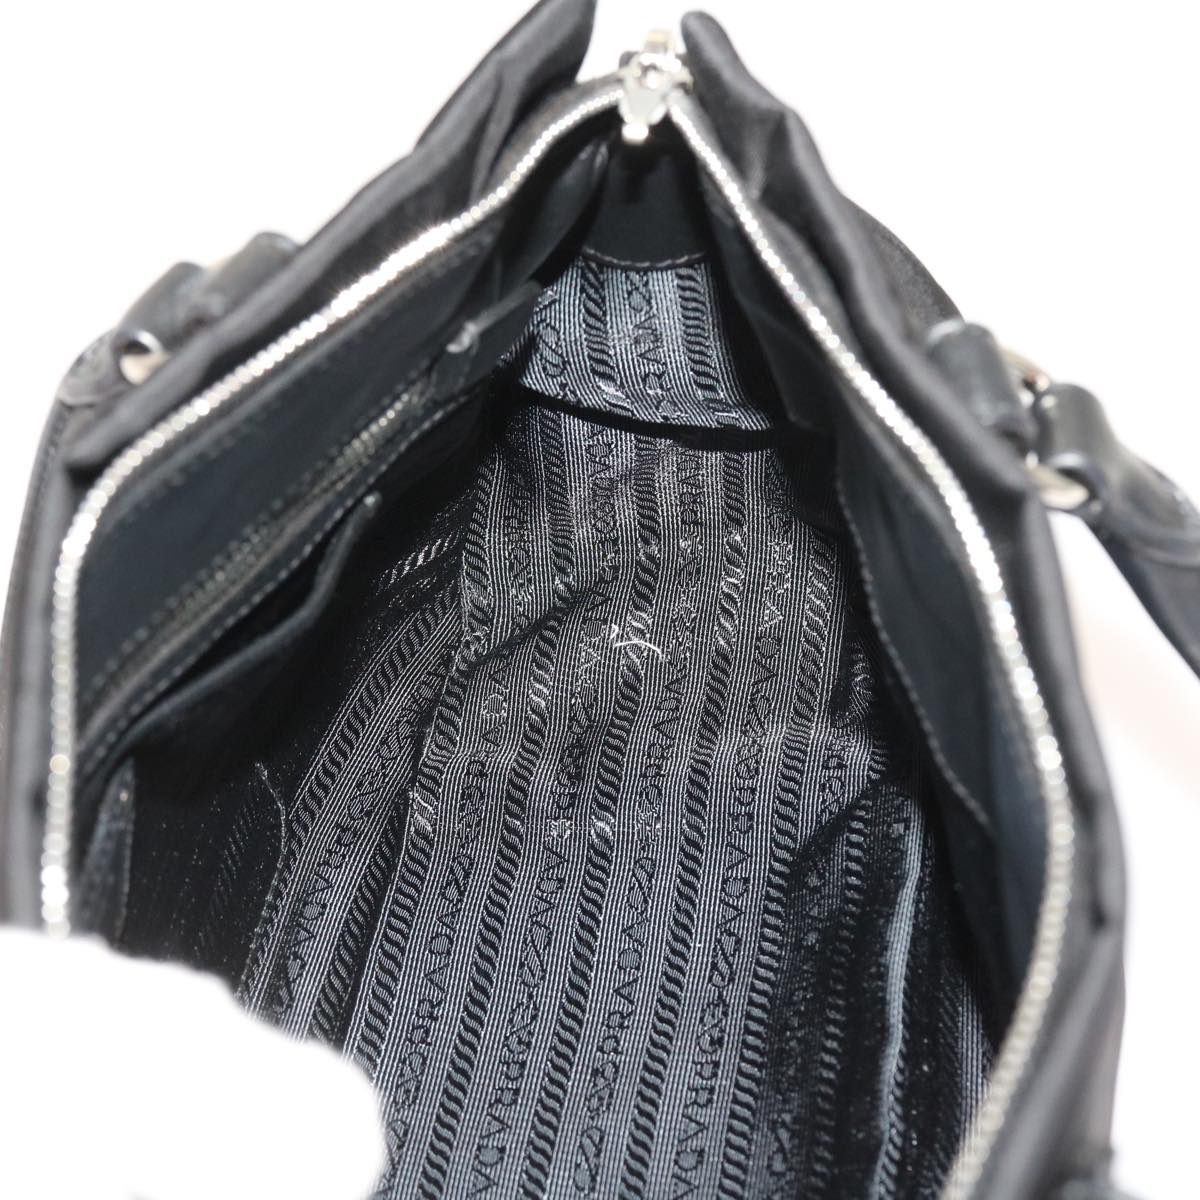 PRADA Hand Bag Nylon 2way Black Auth 56707